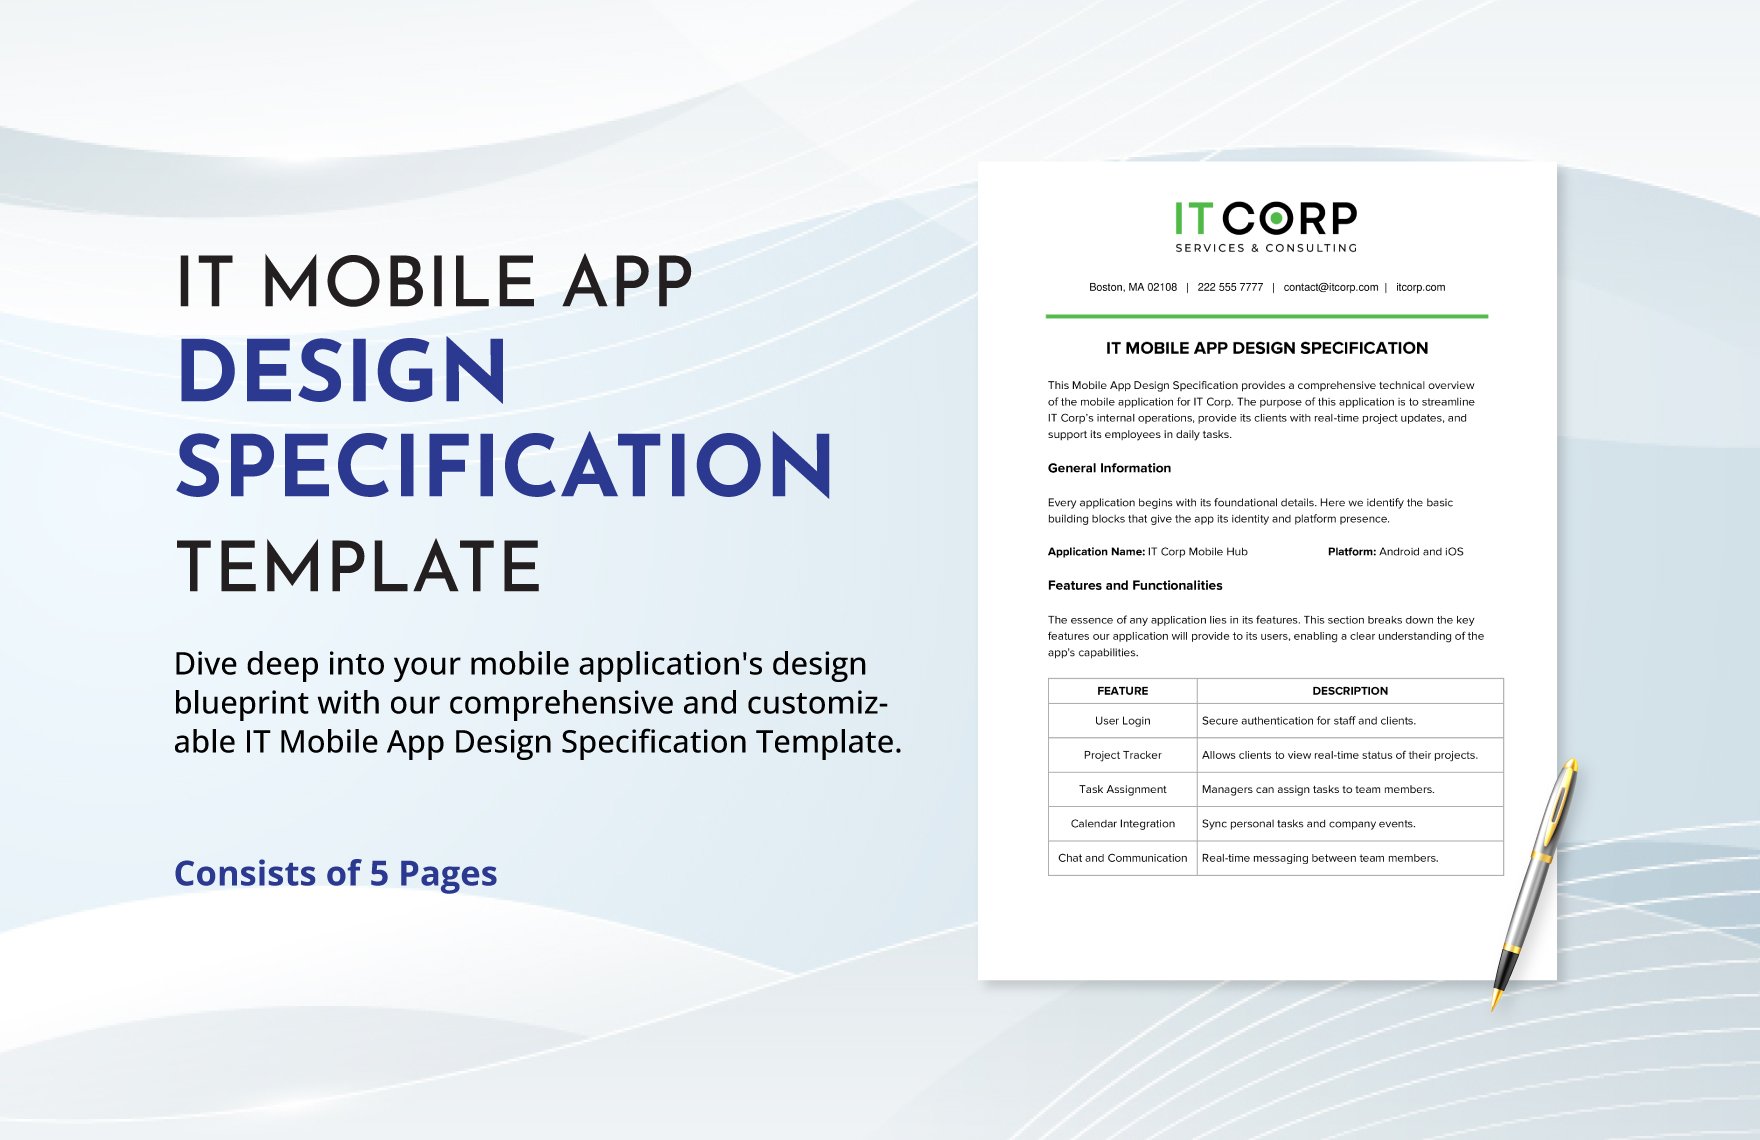 IT Mobile App Design Specification Template